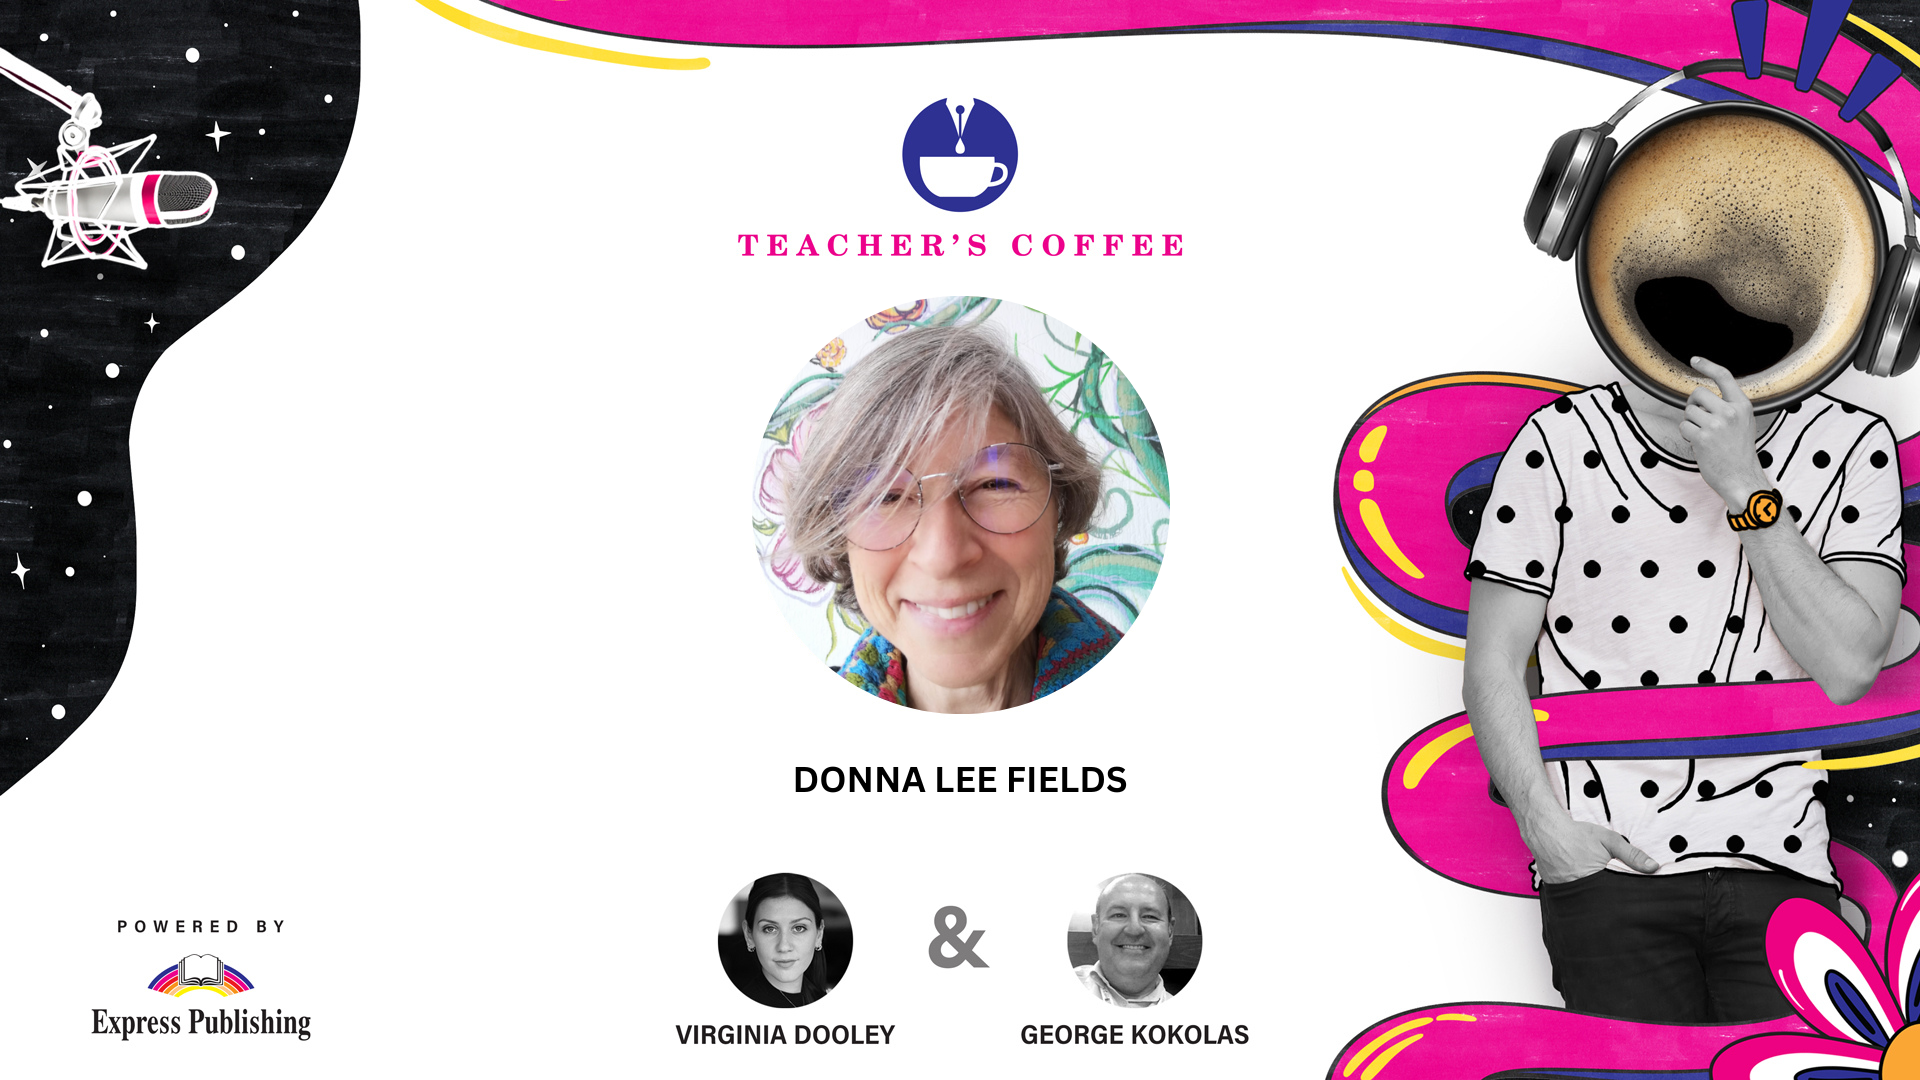 S07E12 Teacher's Coffee with Donna Lee Fields